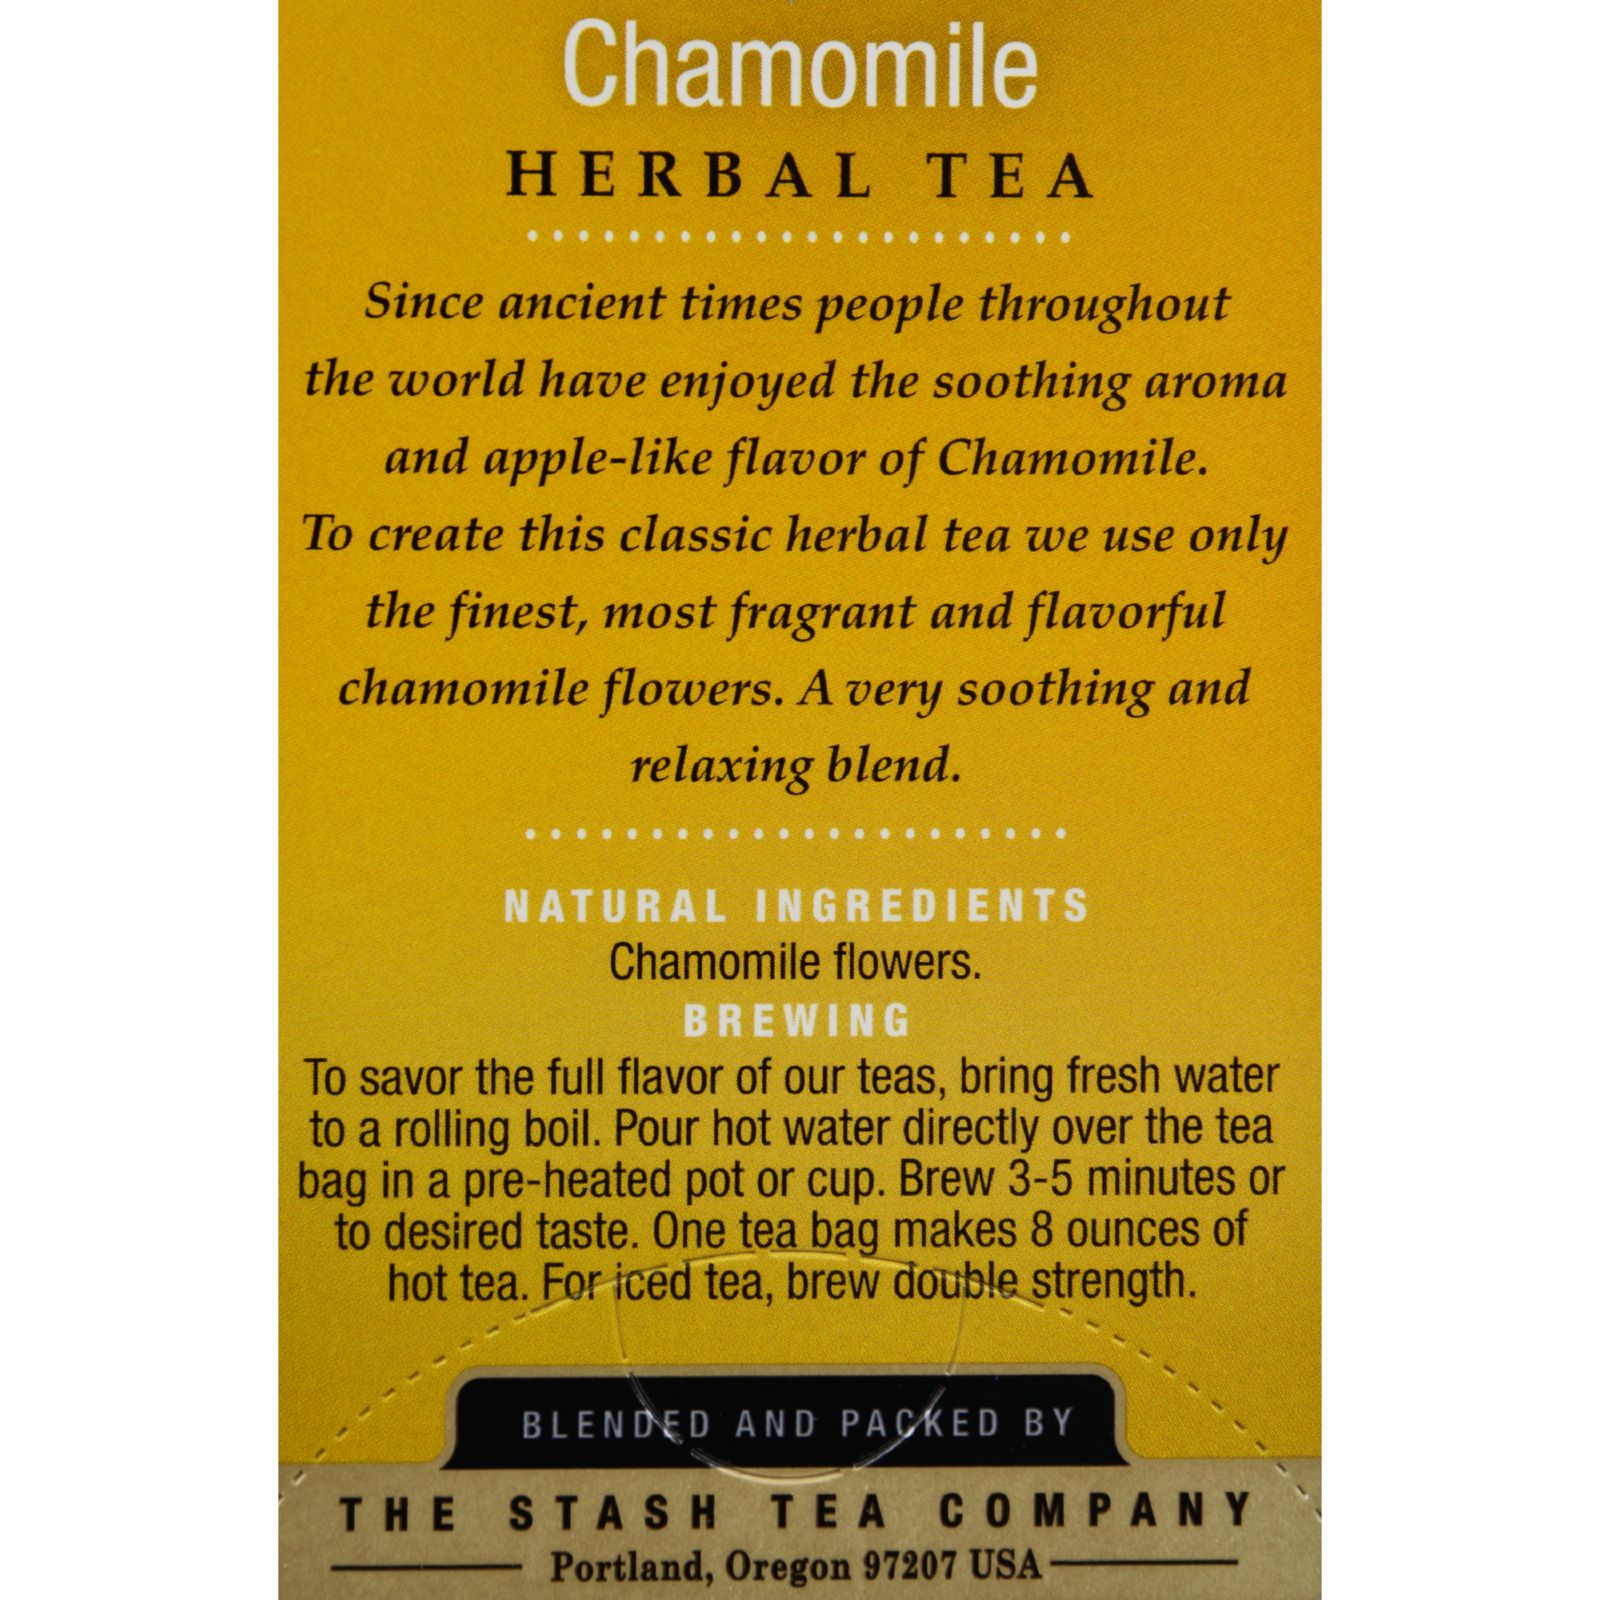 Stash Tea - Herbal - Chamomile - 20 Bags - 6개 묶음상품